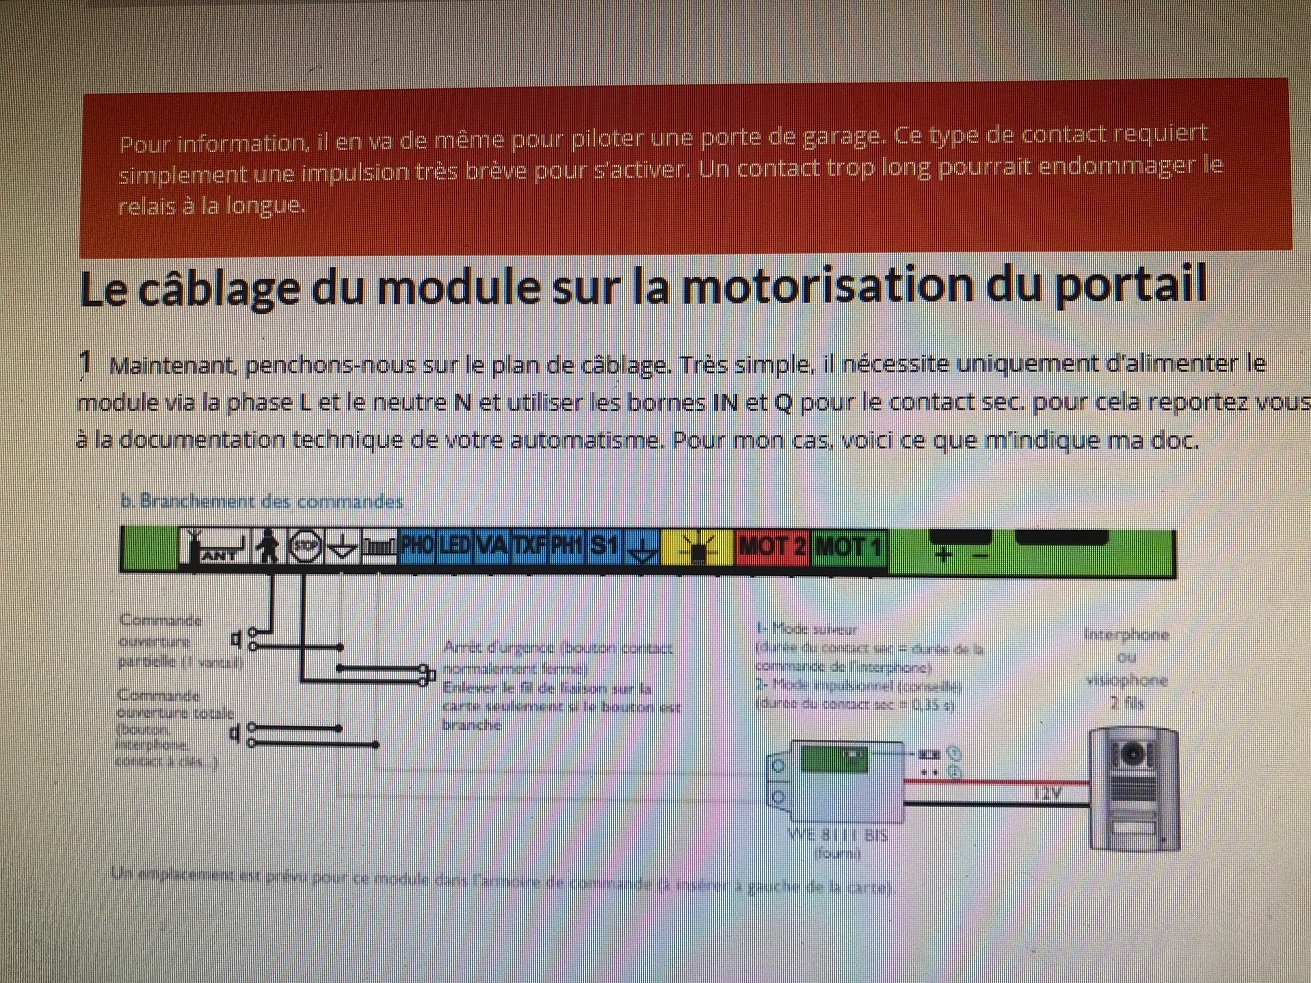 configuration FGS 212 mode impulsion - page 3 sur 3.jpg